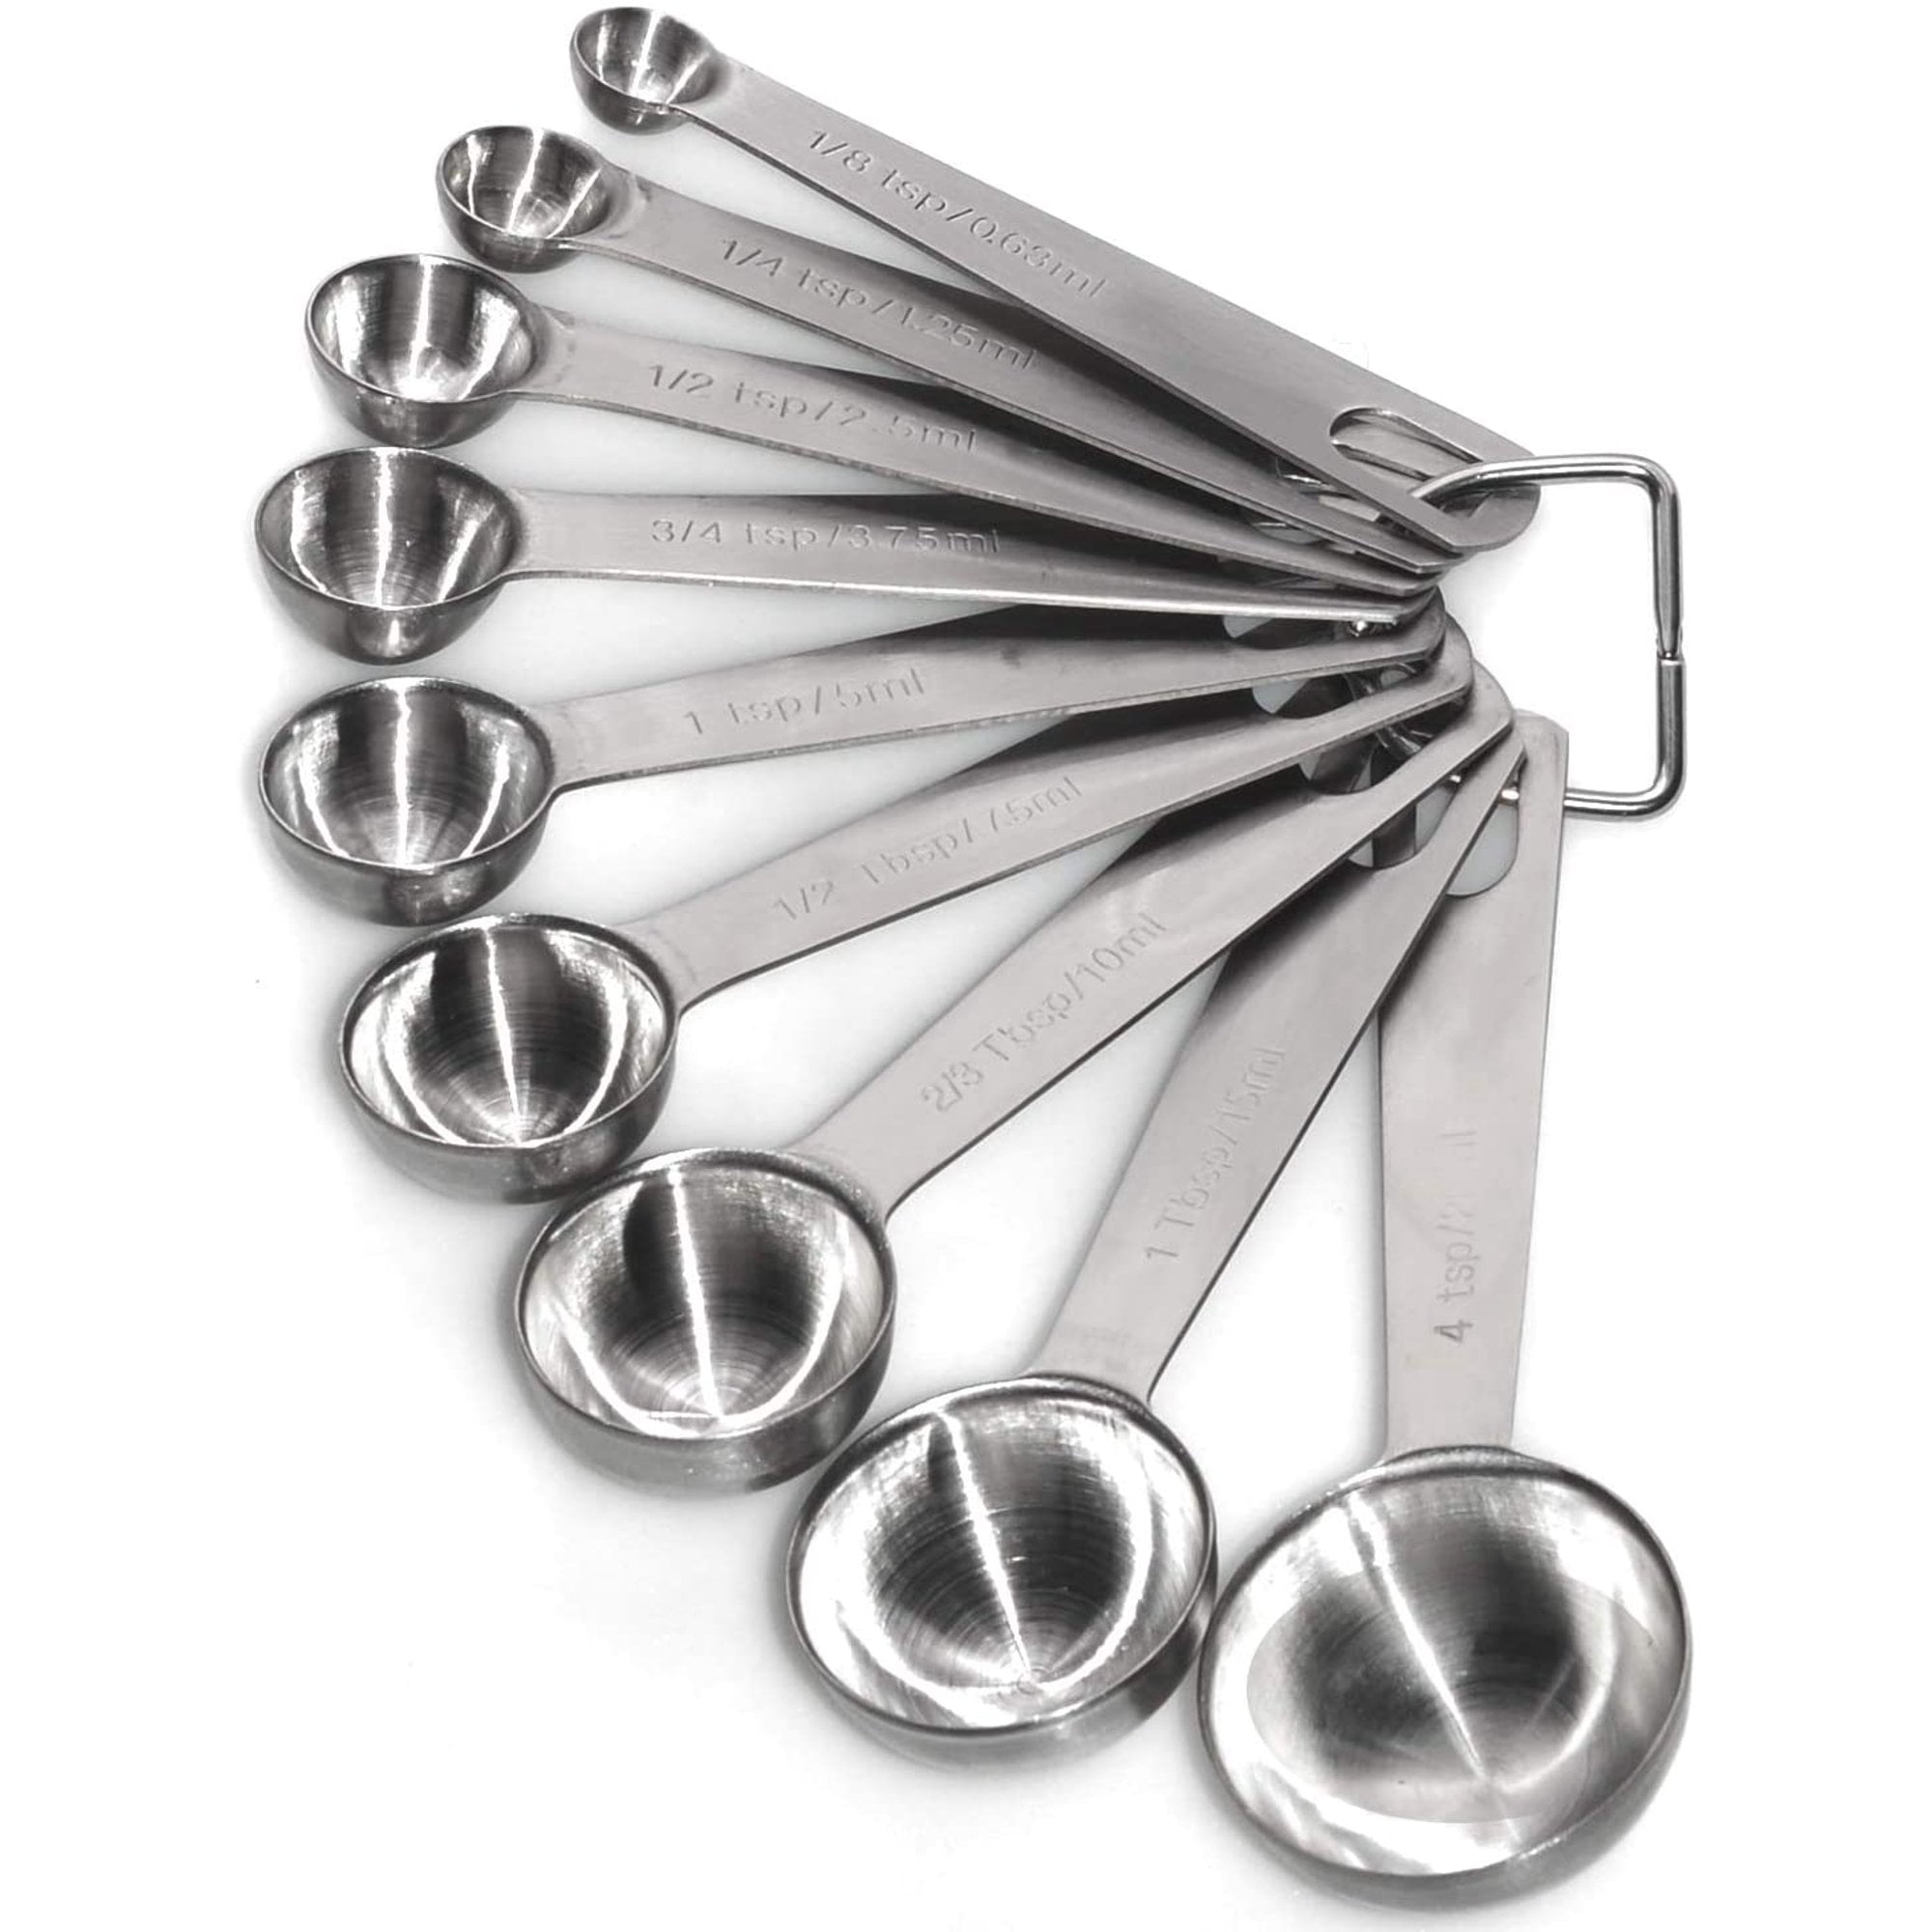 vintage set of 4 metal measuring spoons 1/4, 1/2, 1tsp 1 tbs